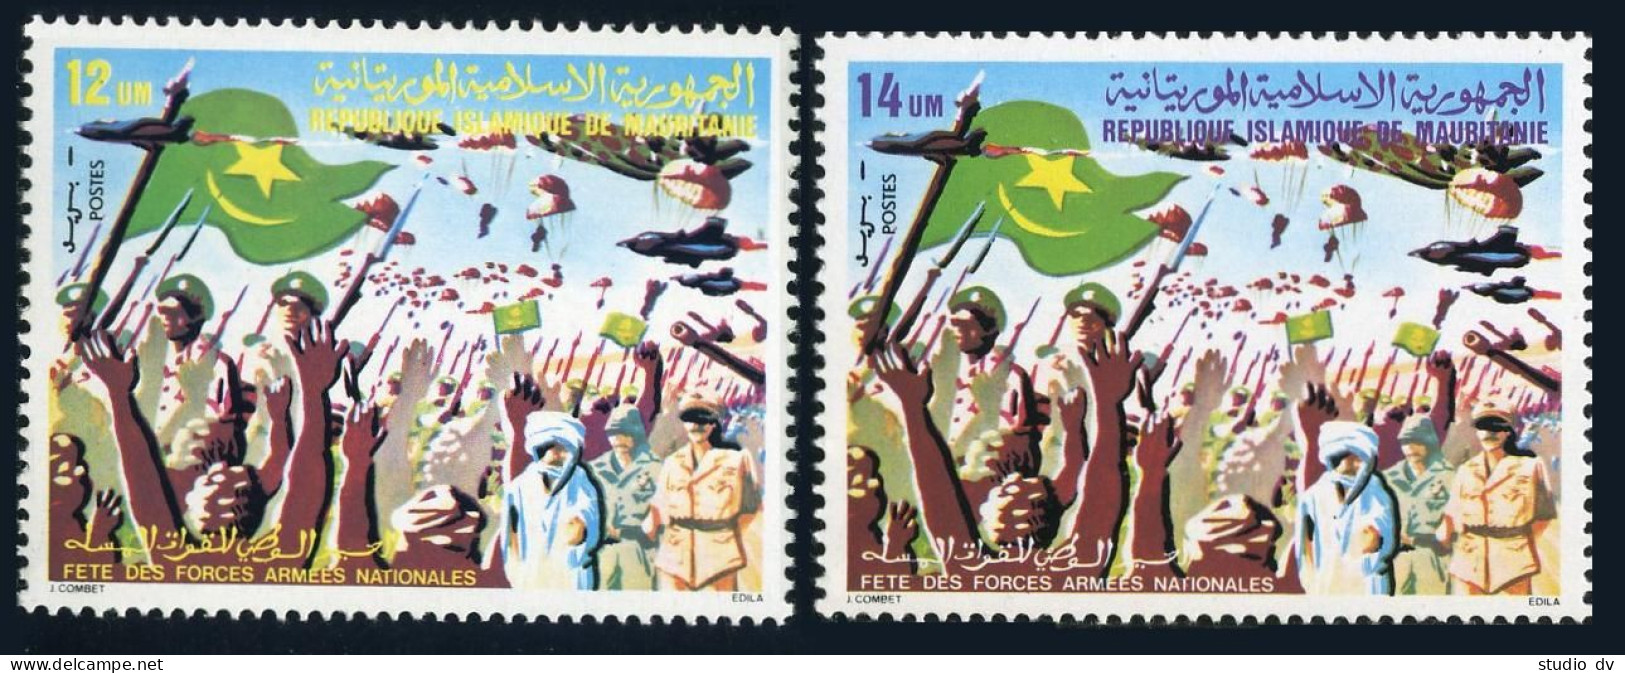 Mauritania 451-452, MNH. Mi 678-679. Armed Forces Day,1980. Planes,parachutists. - Mauritania (1960-...)